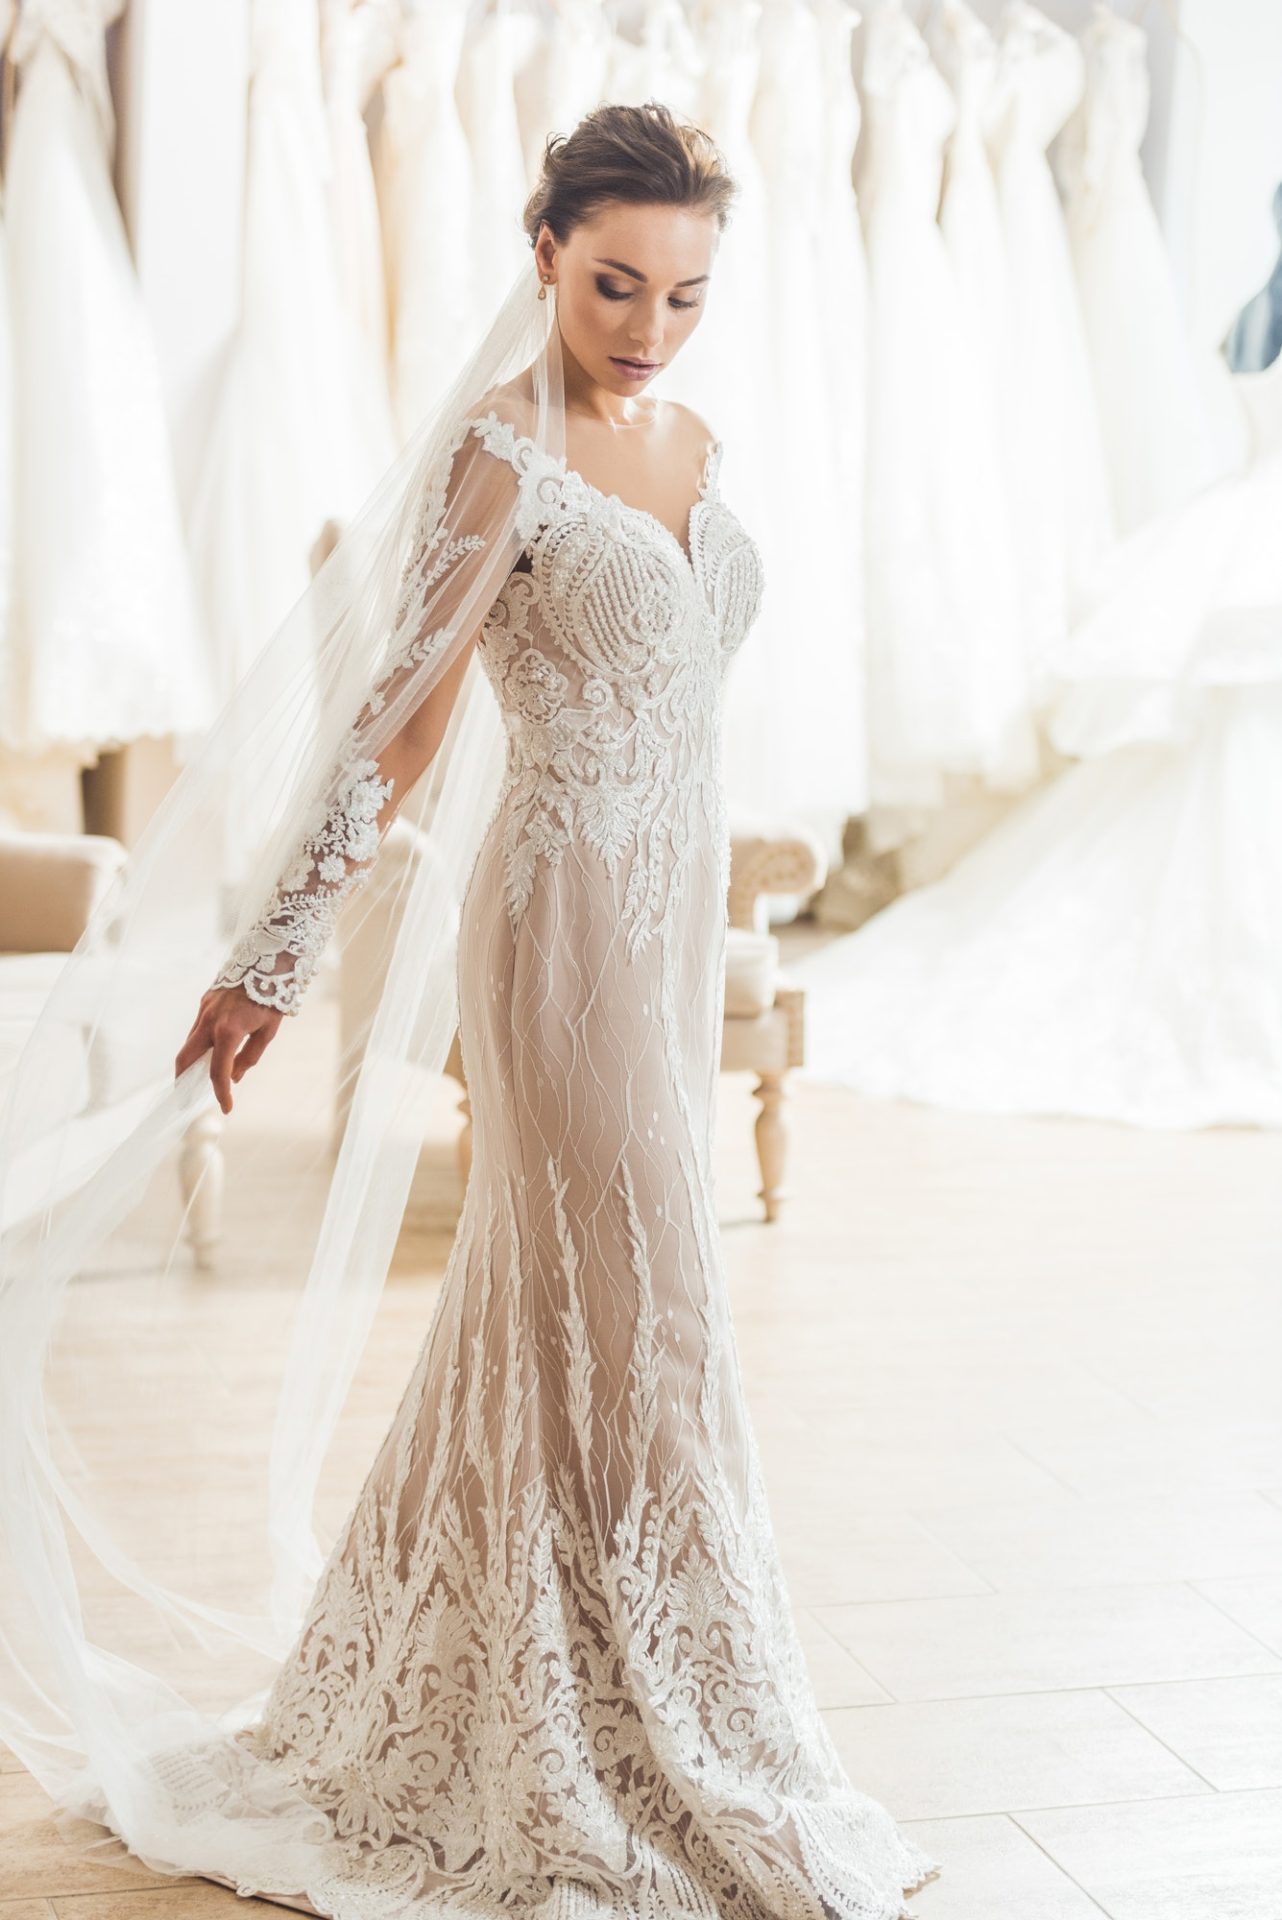 Stylish bride in lace dress in wedding atelier